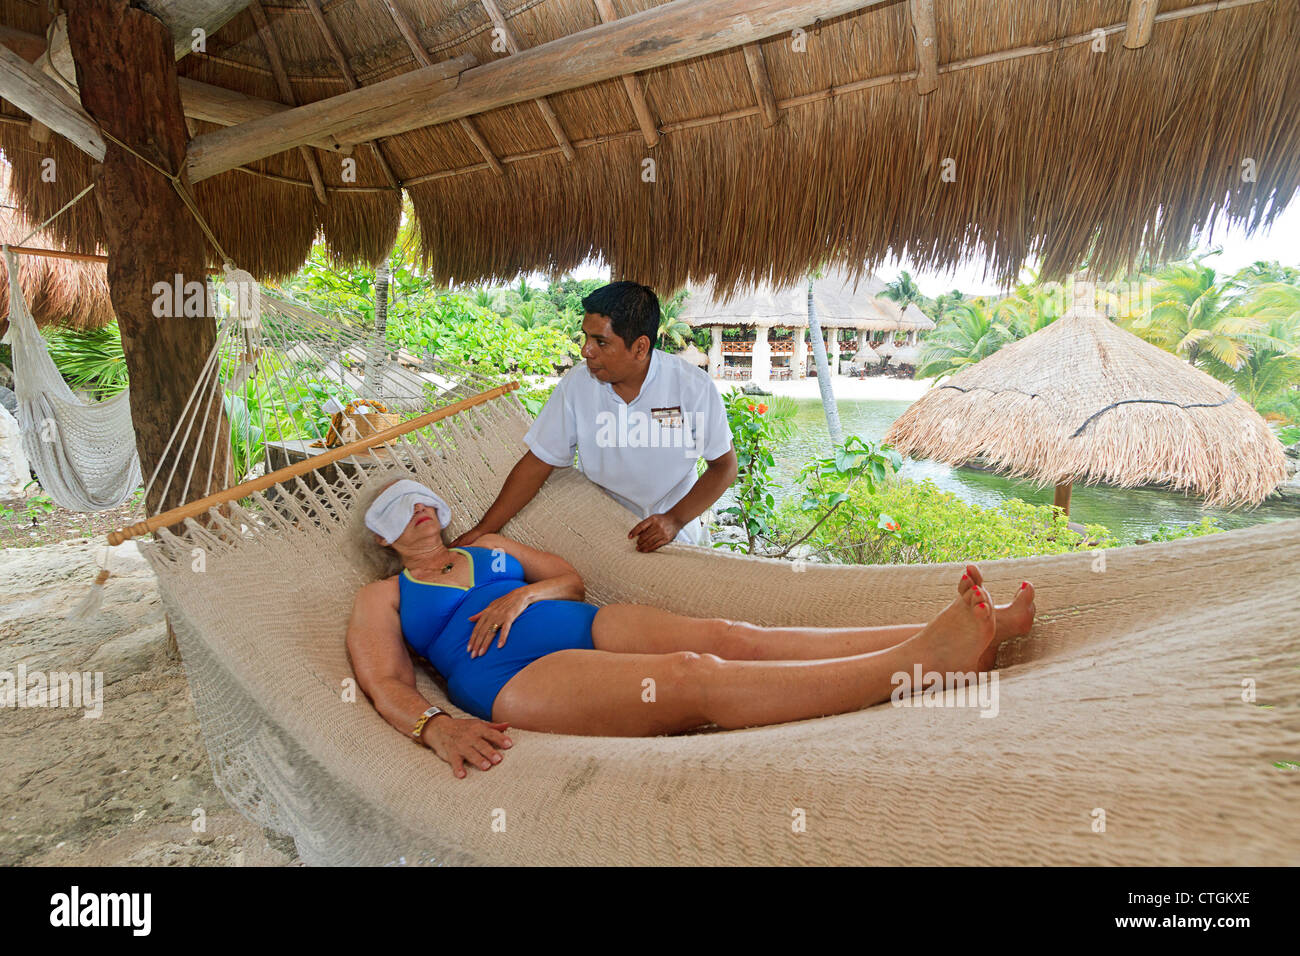 Woman enjoys massage from Maya man while lying in a hammock at Xcaret, an amusement park in Riviera Maya, Yucatan, Mexico. Stock Photo